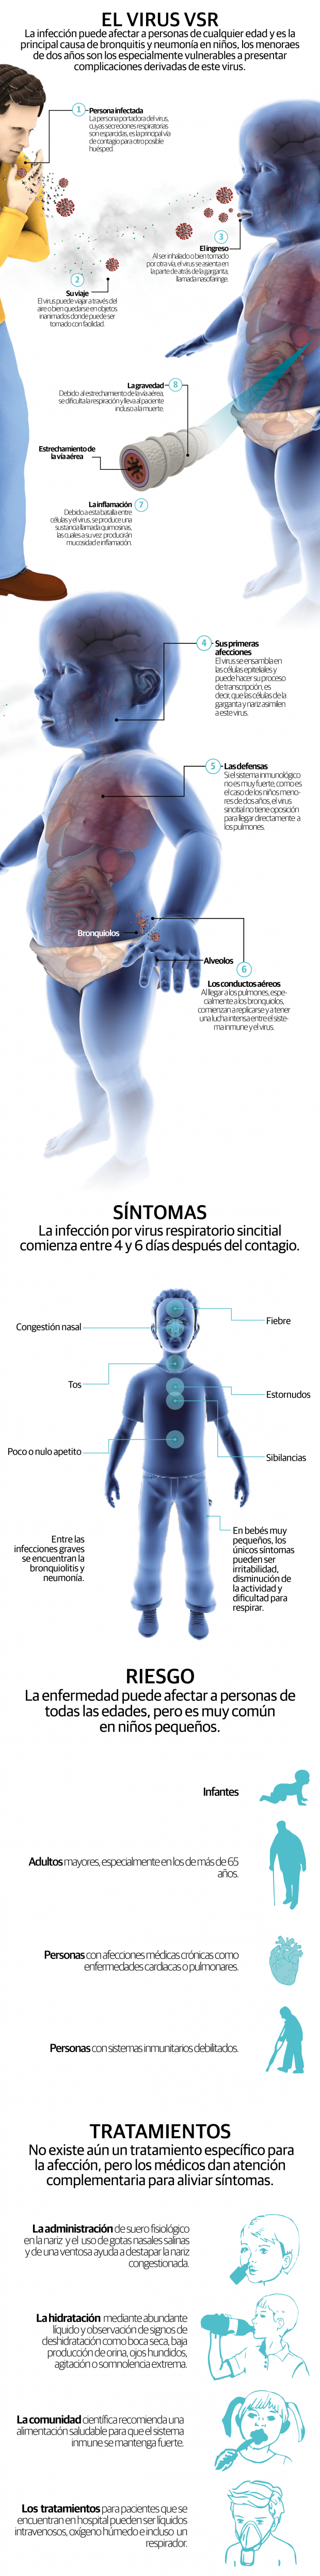 Alerta máxima en EU por virus sincitial respiratorio en niños